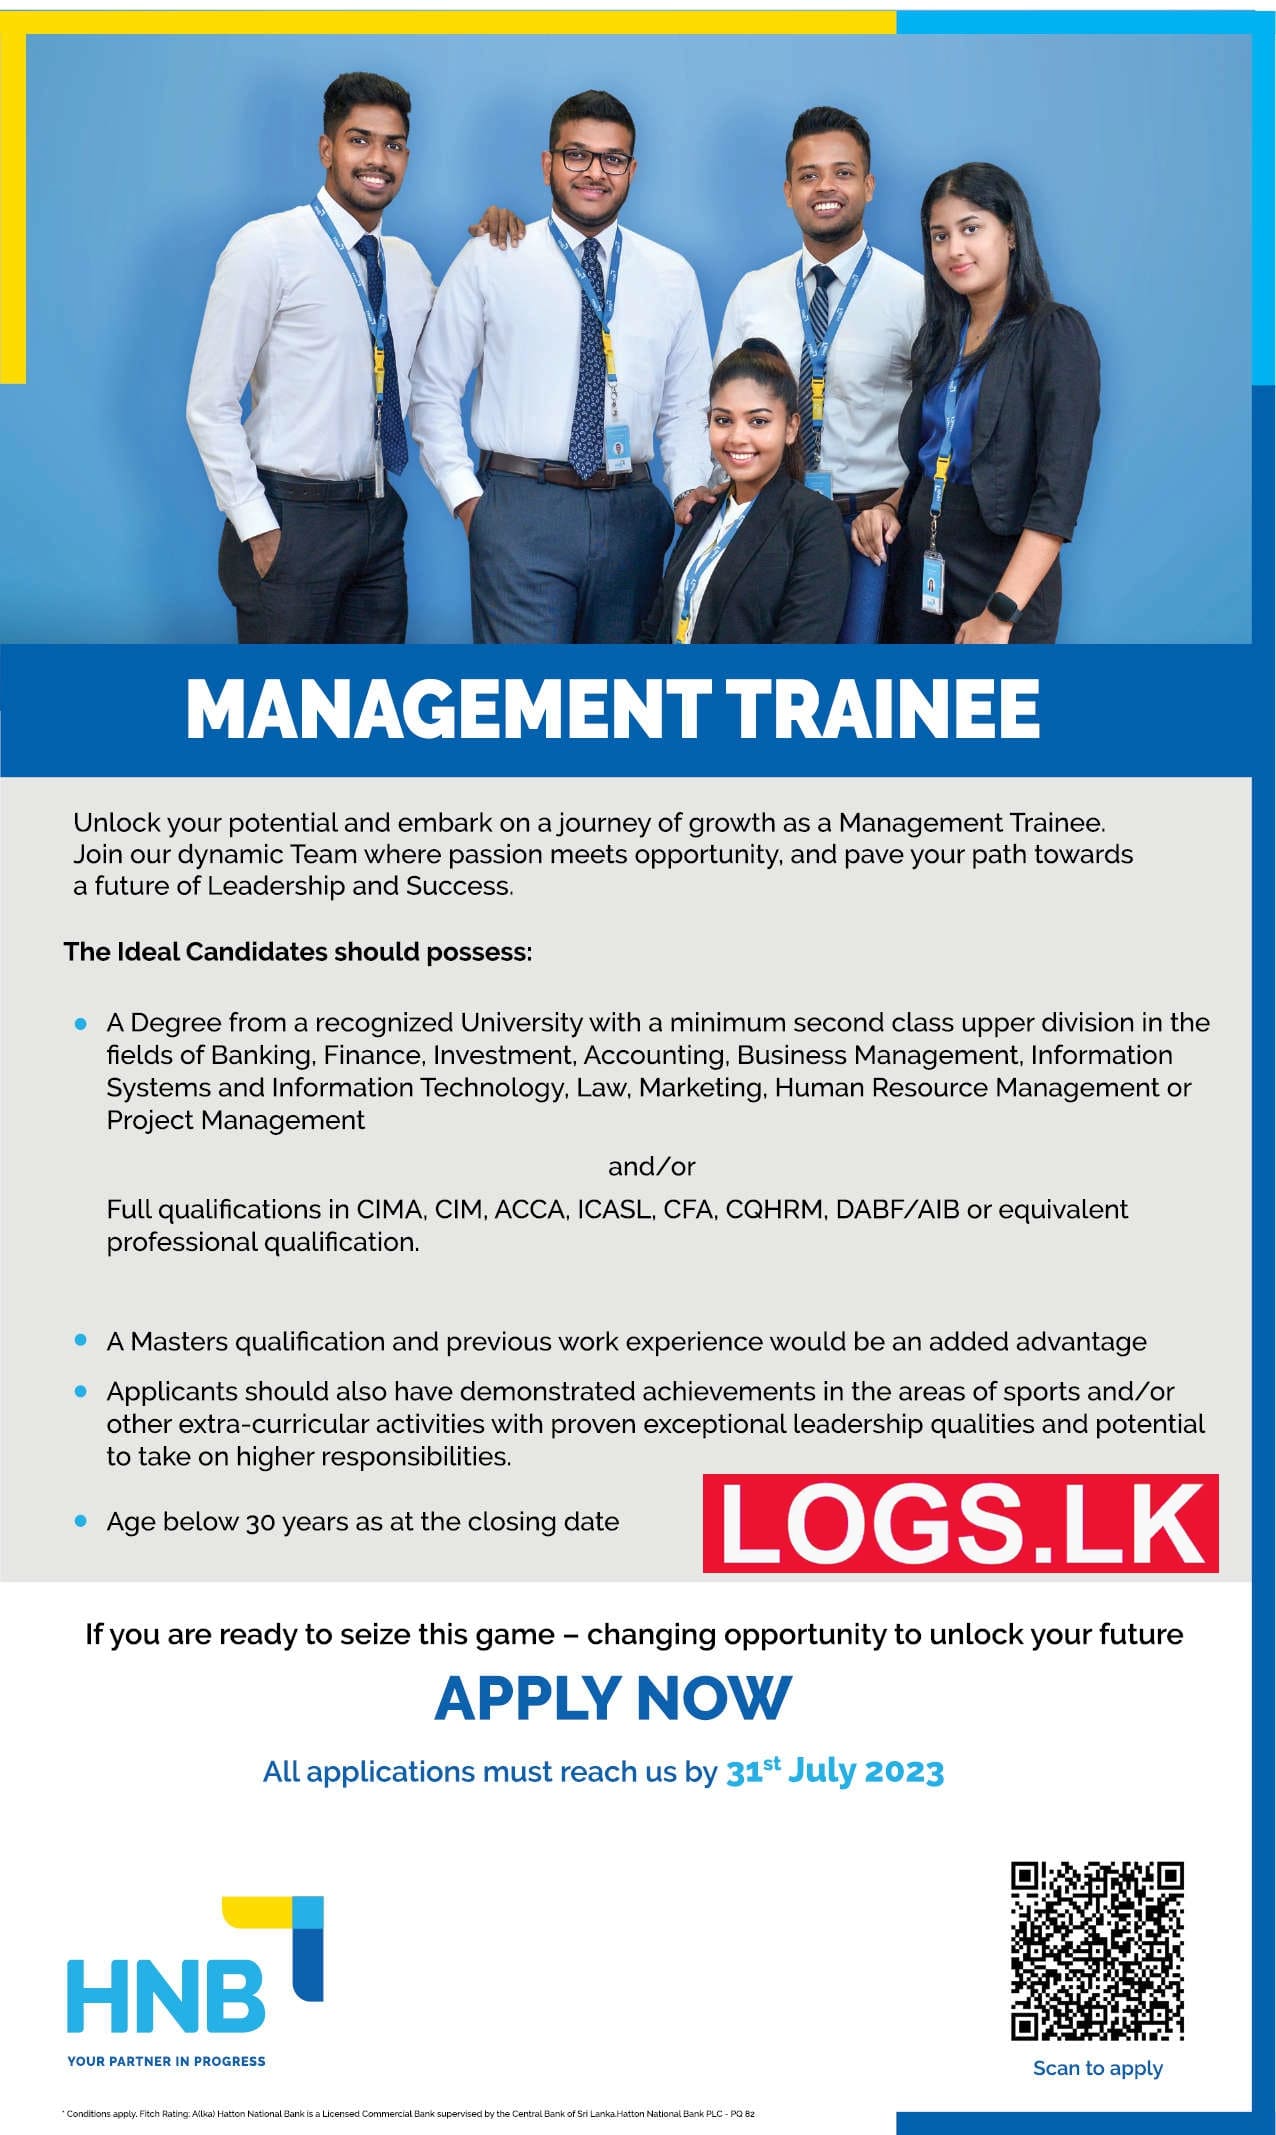 Management Trainee Job Vacancies at HNB Bank in Sri Lanka Apply Online